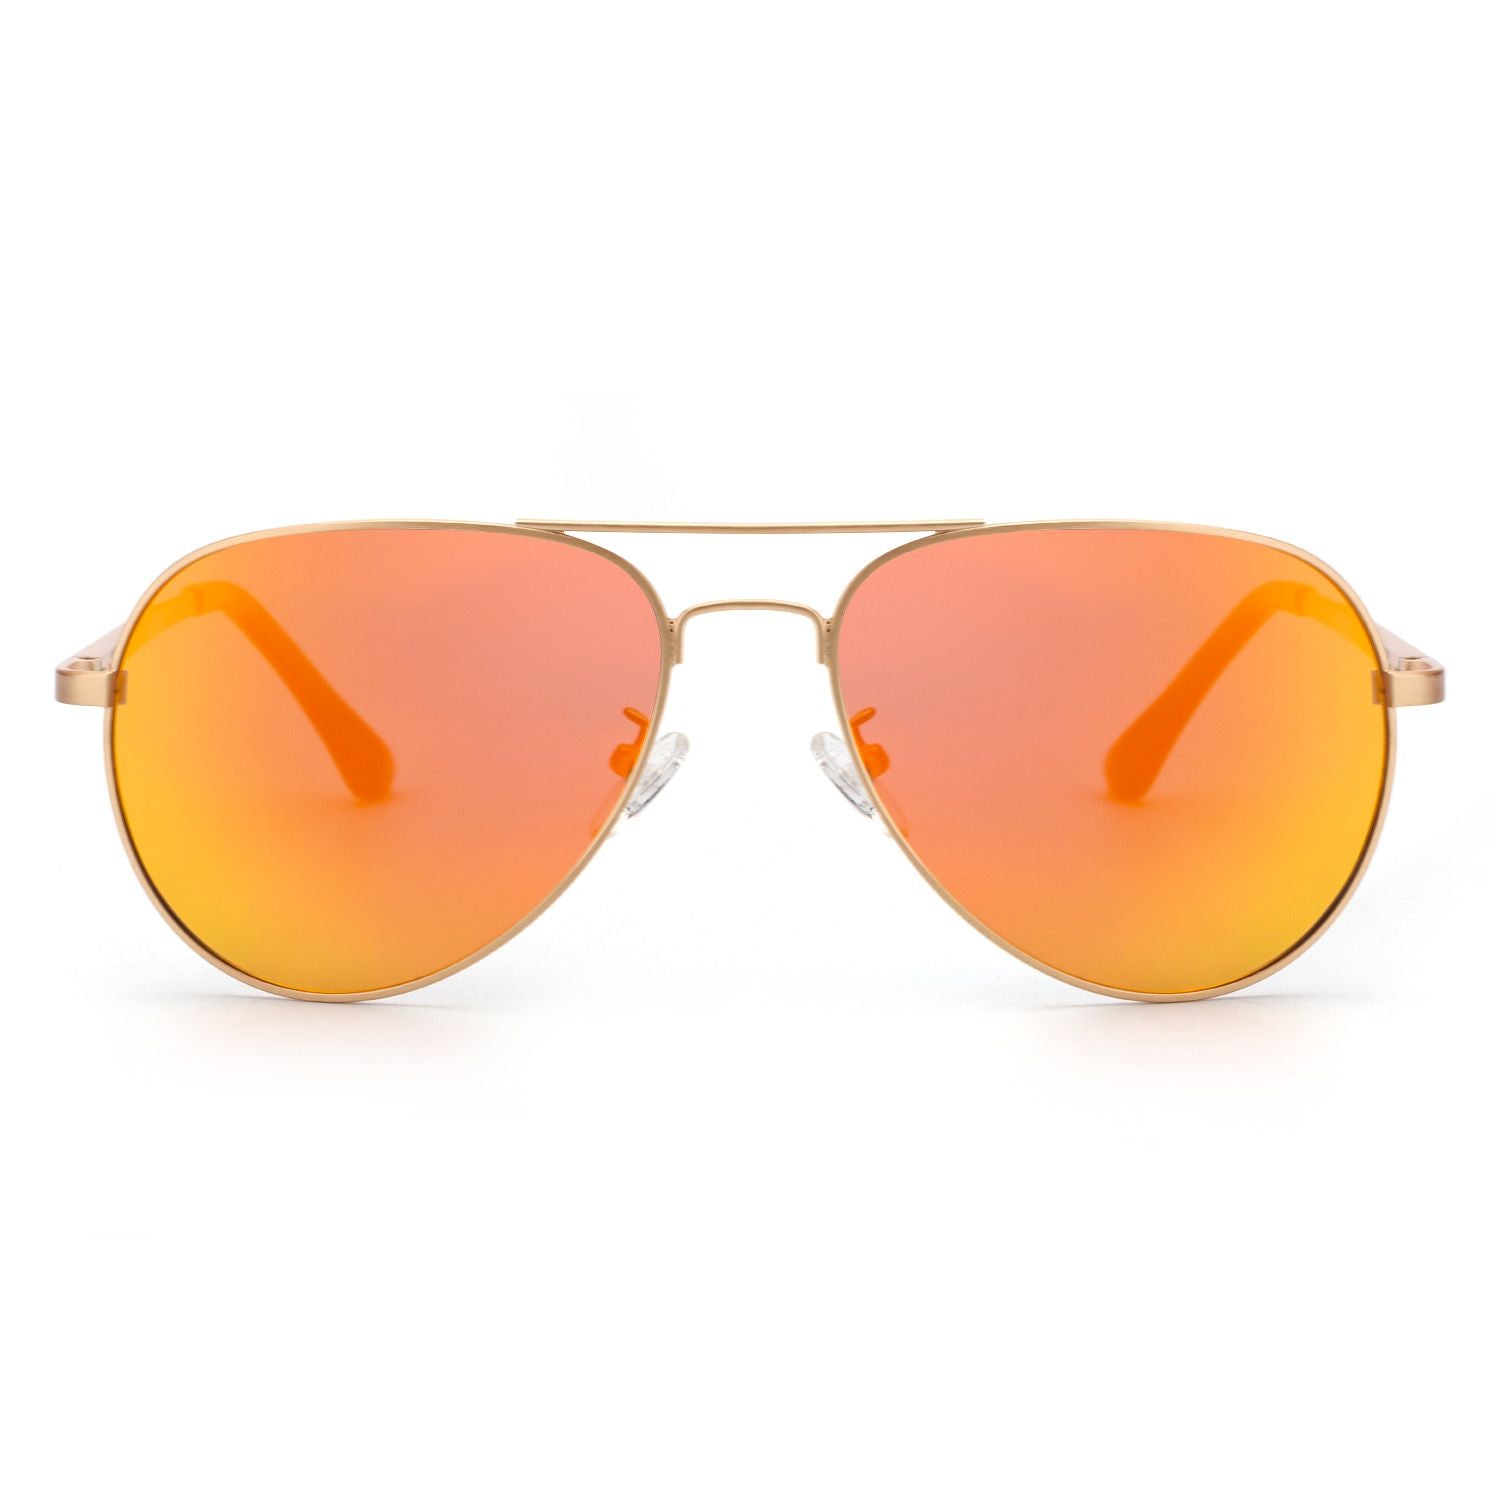 Quelife Women Men Vintage Retro Glasses Unisex Fashion Aviator Mirror Lens Sunglasses 